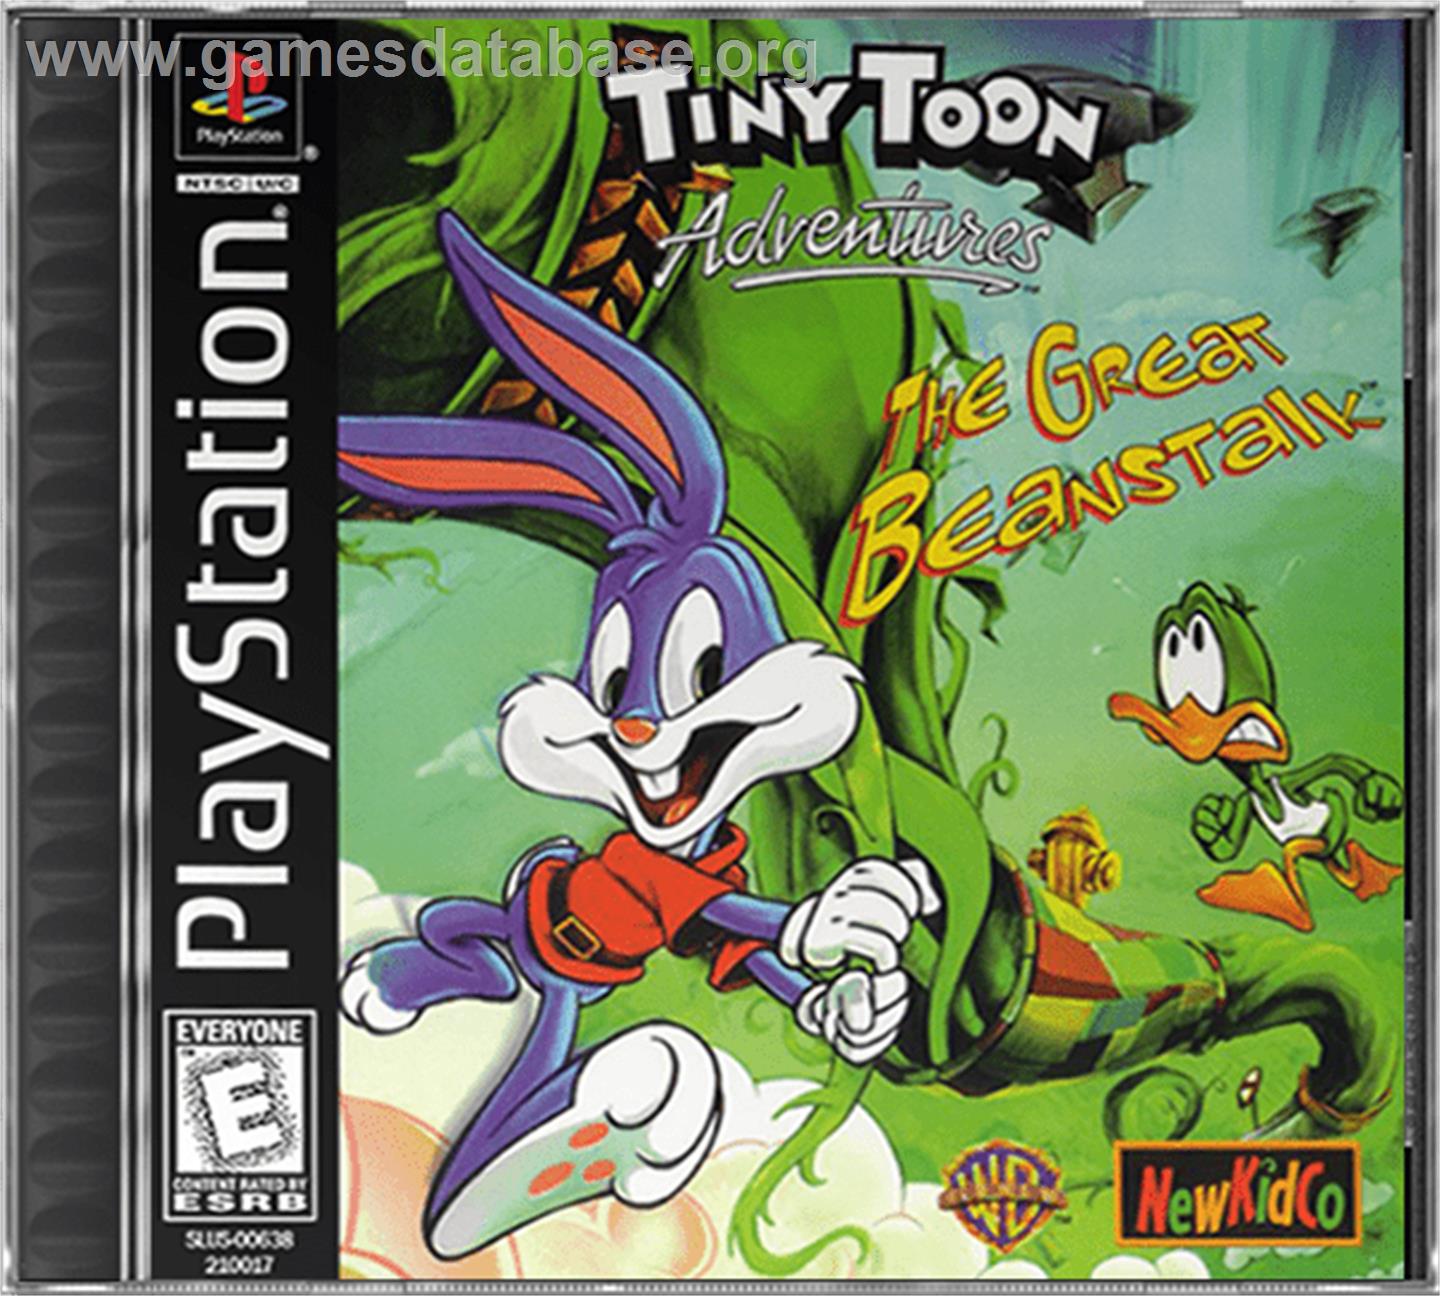 Tiny Toon Adventures: The Great Beanstalk - Sony Playstation - Artwork - Box